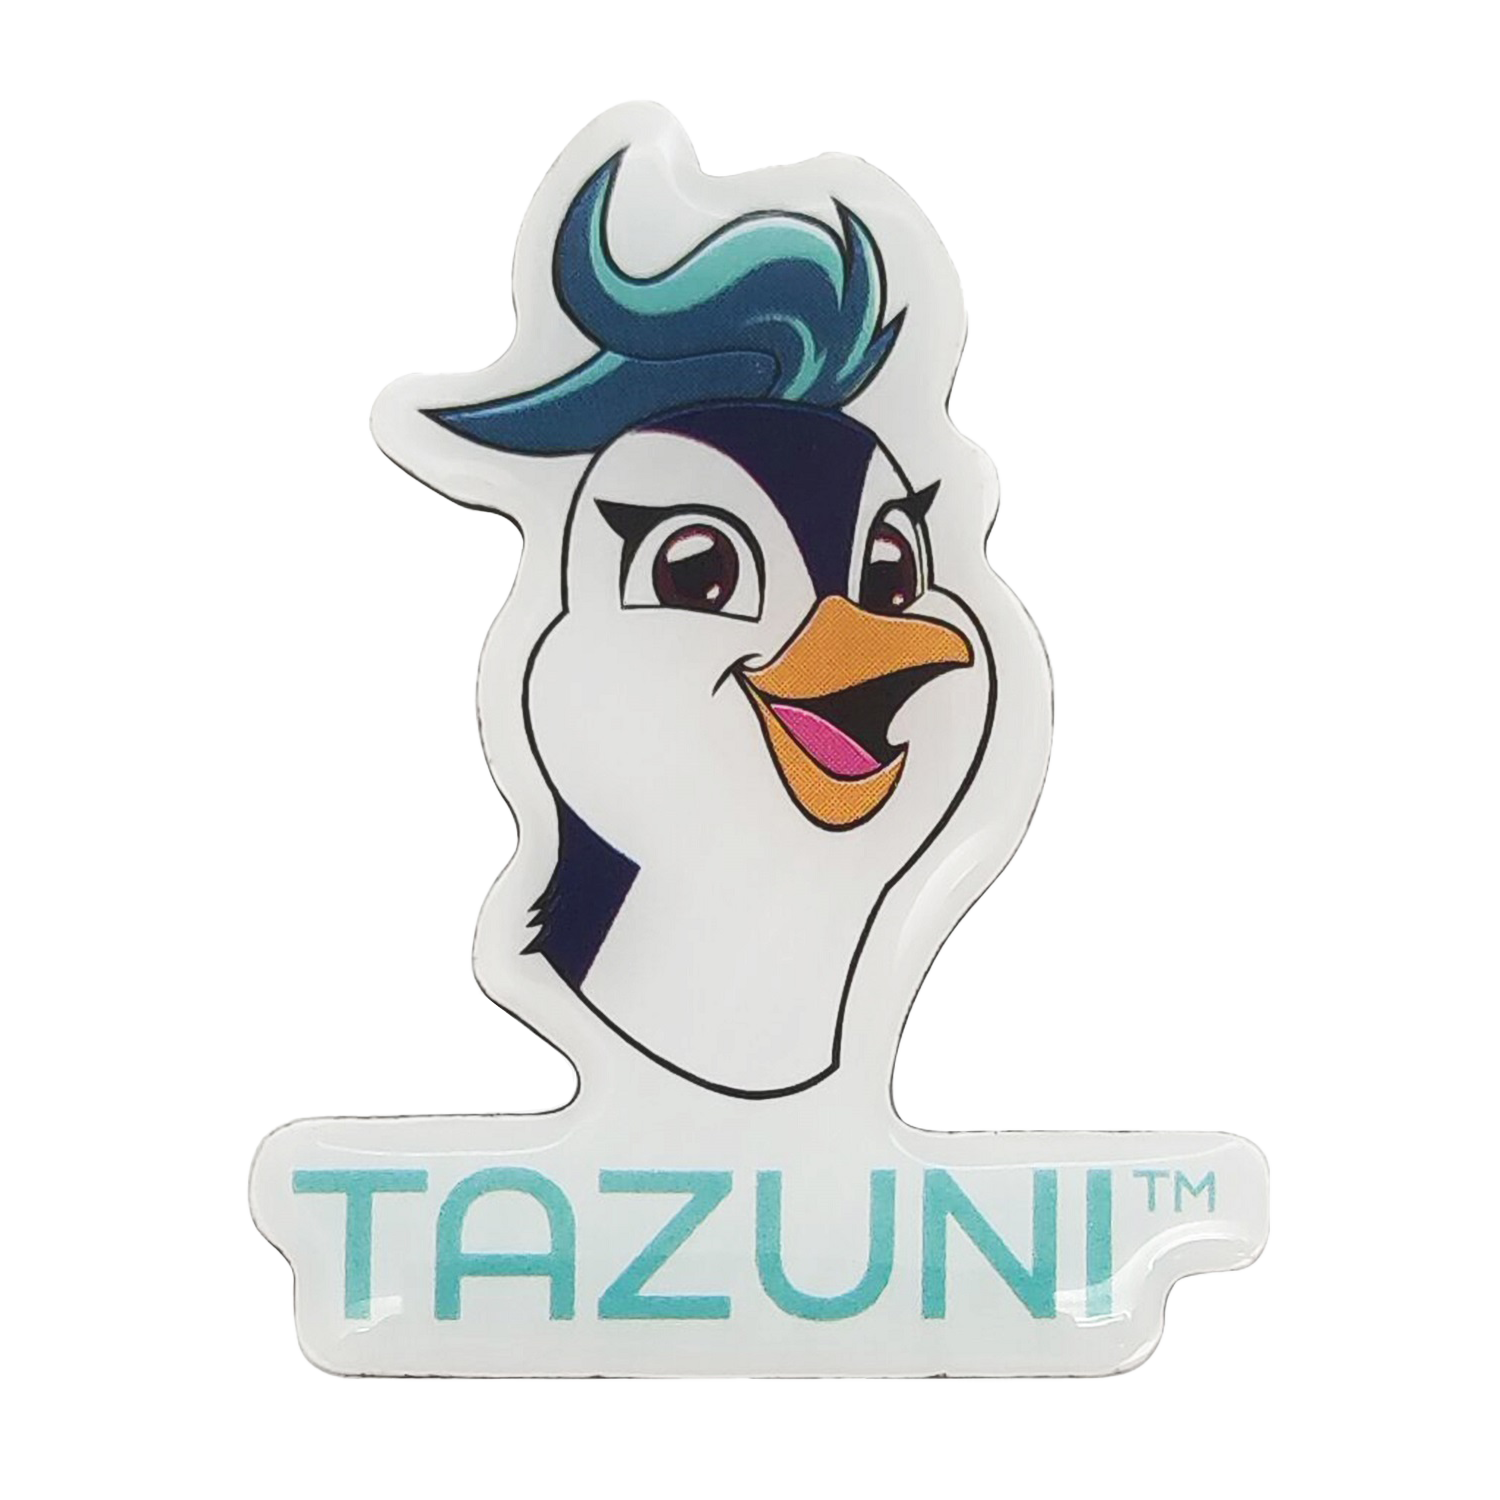 2023 FIFA Women's World Cup Tazuni Mascot Magnet